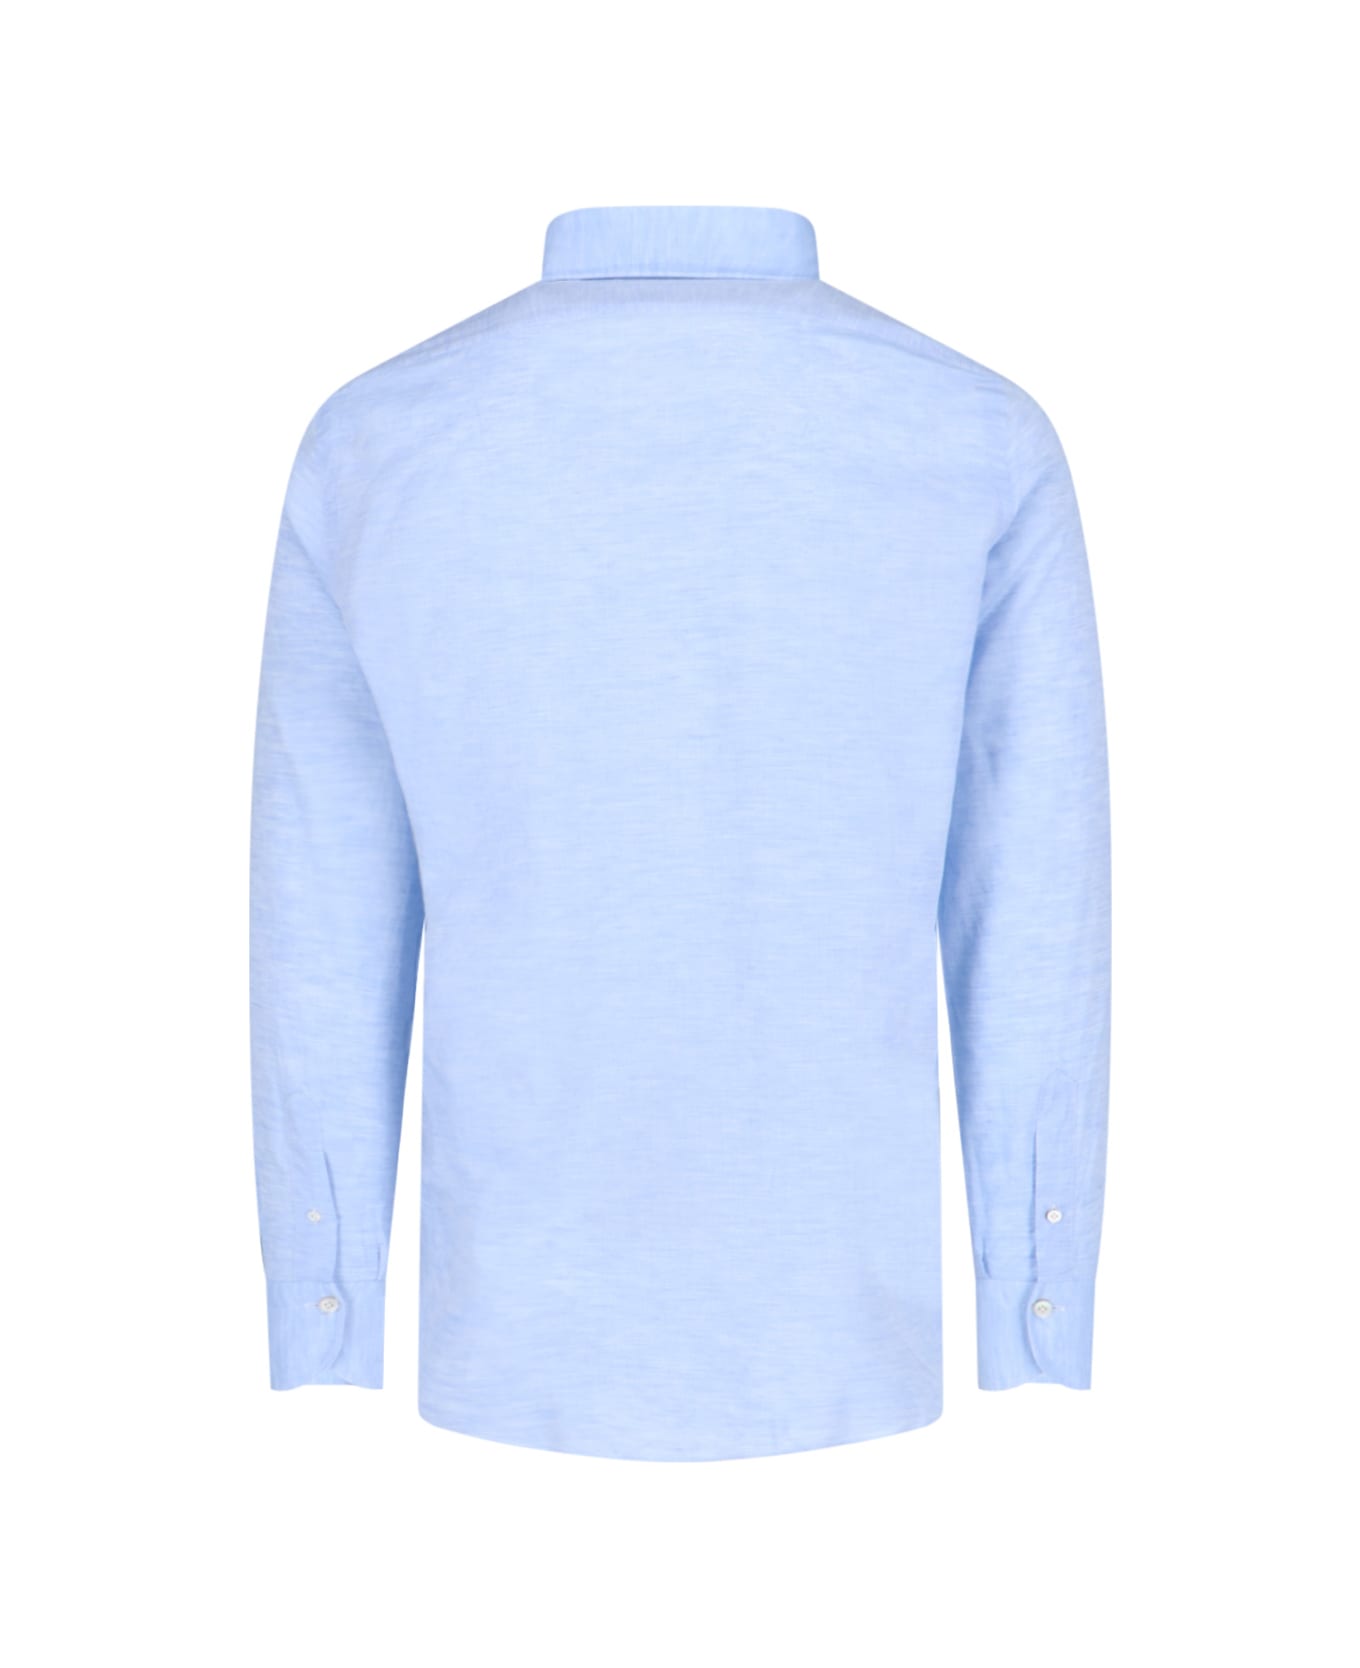 Finamore Basic Shirt - Light Blue